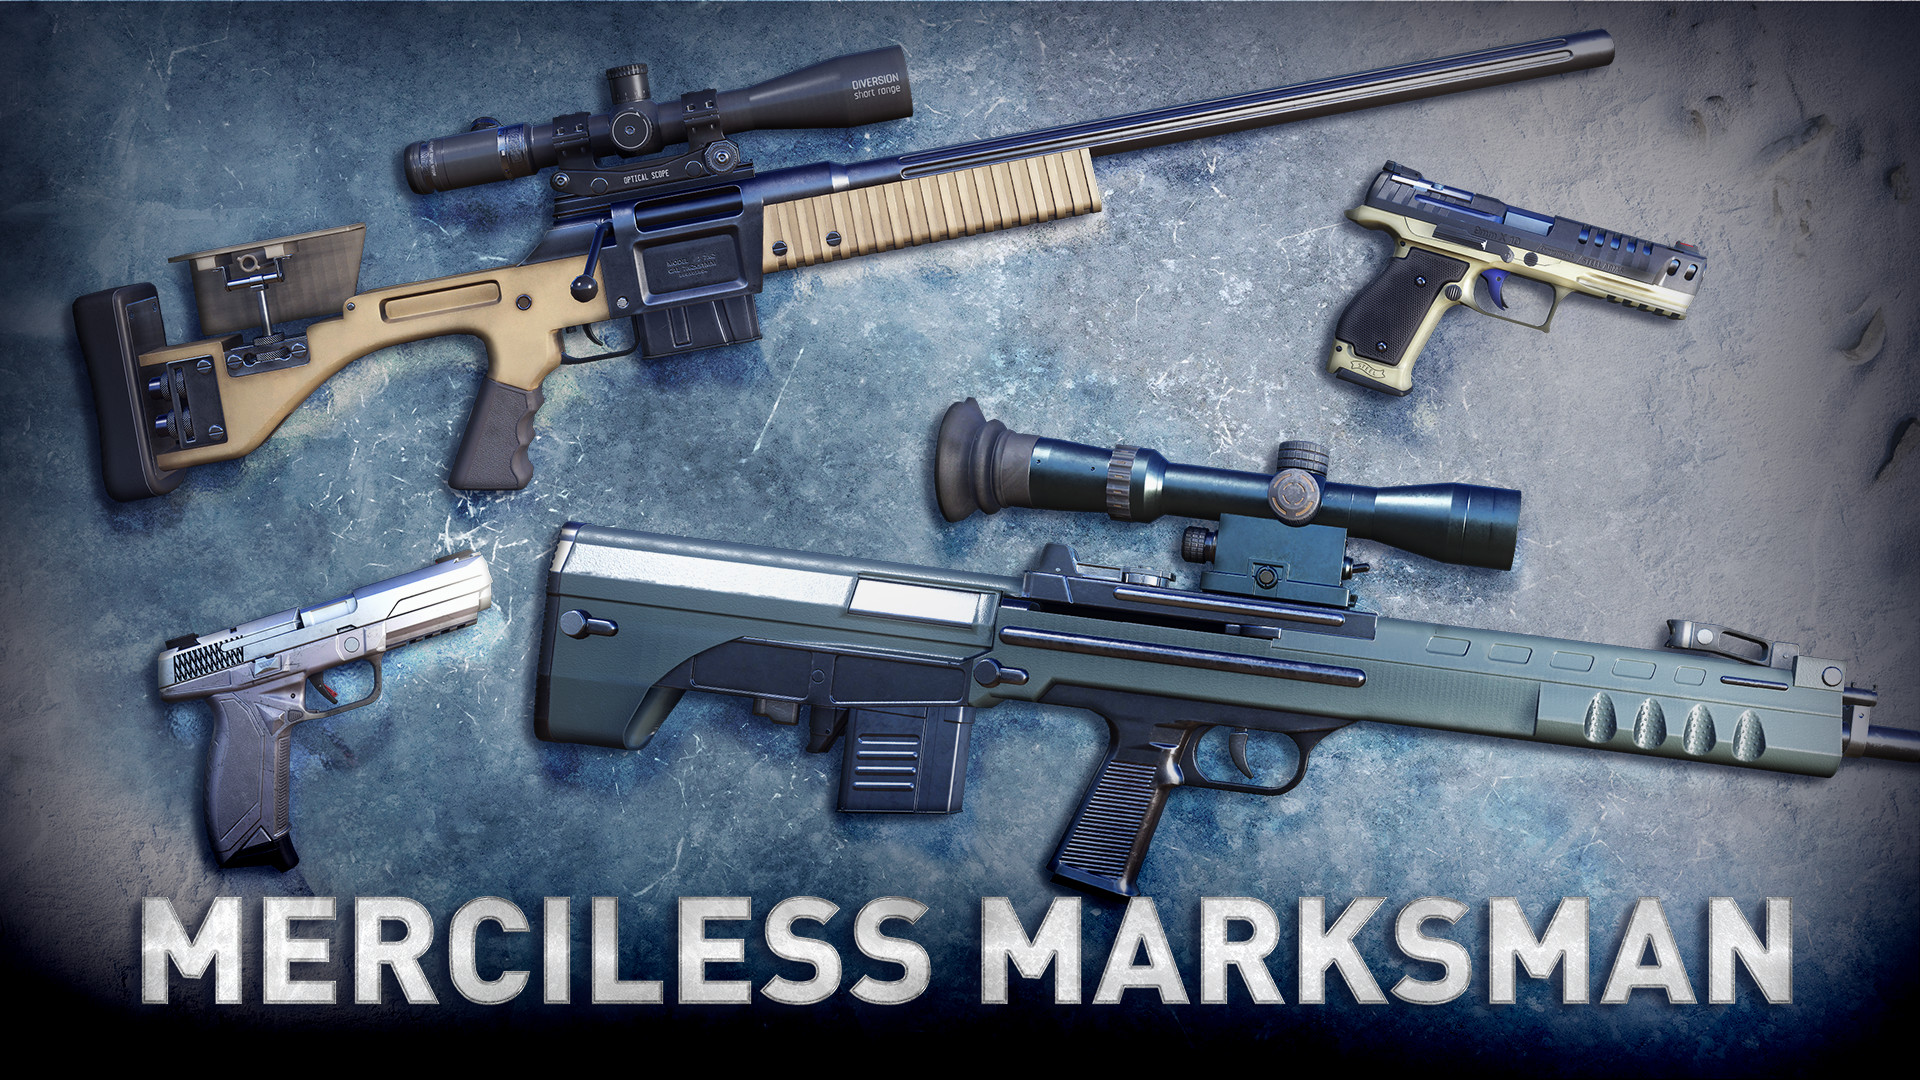 Sniper Ghost Warrior Contracts - Merciless Marksman Weapon & Skin DLC Pack Featured Screenshot #1